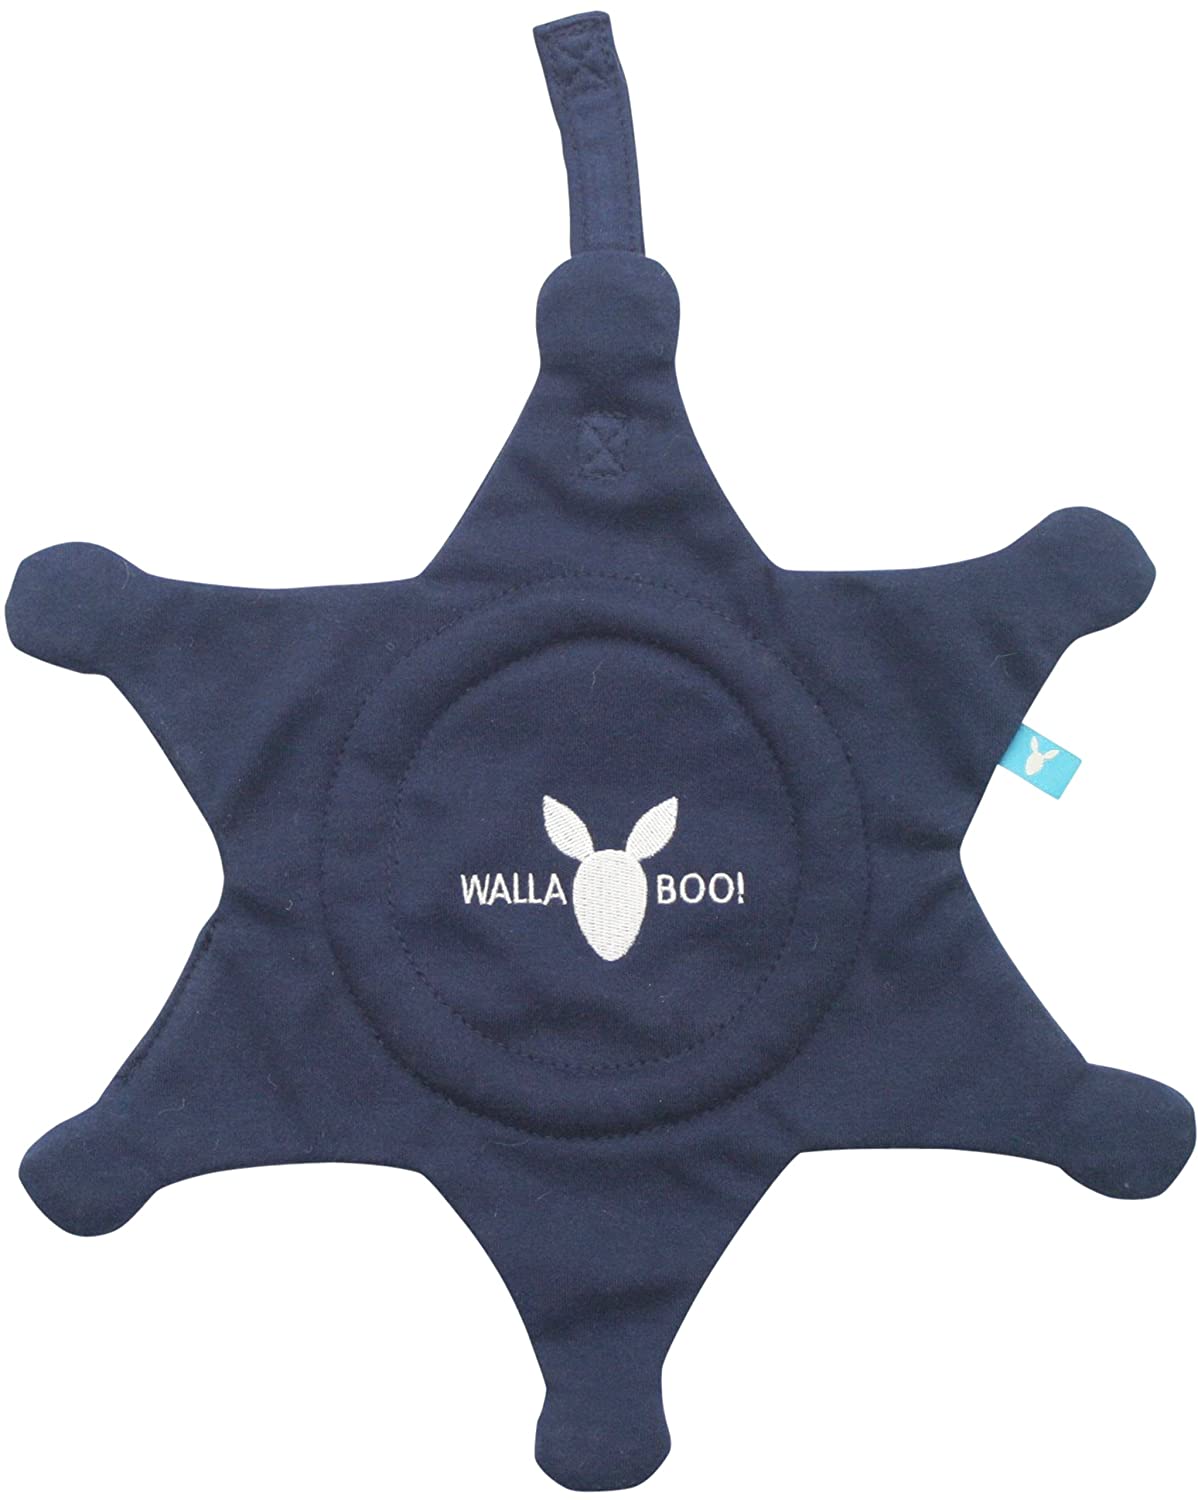 Wallaboo Security Blanket True Blue Comforter